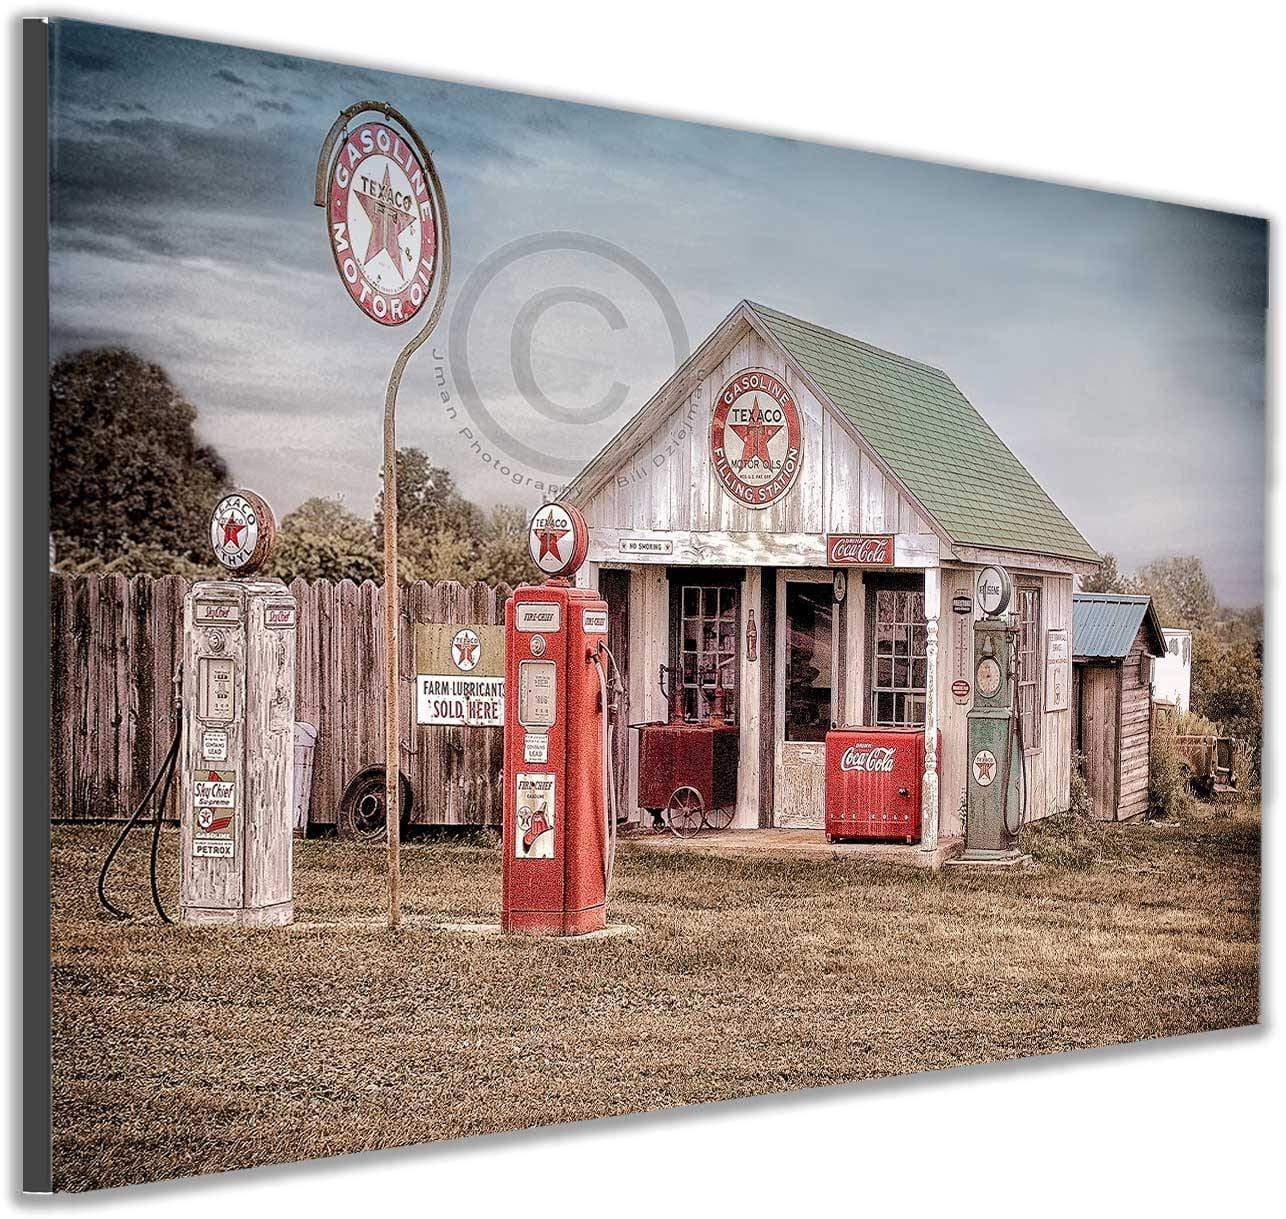 Texaco Vintage gas station and pumps, NY photo – JMan Photography